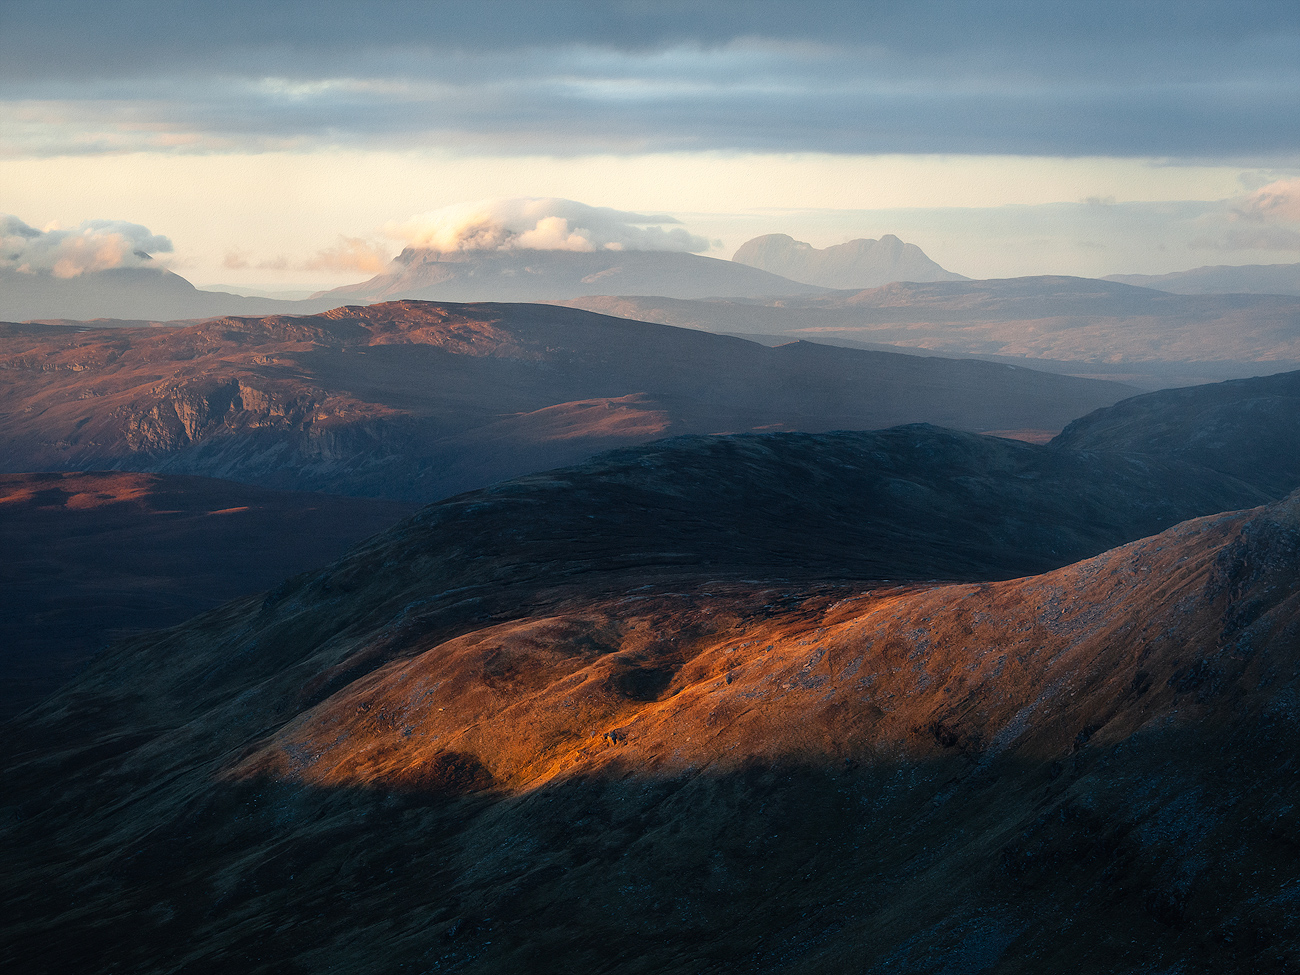 Assynt at Dawn, Sutherland, Scotland by Nils Leonhardt